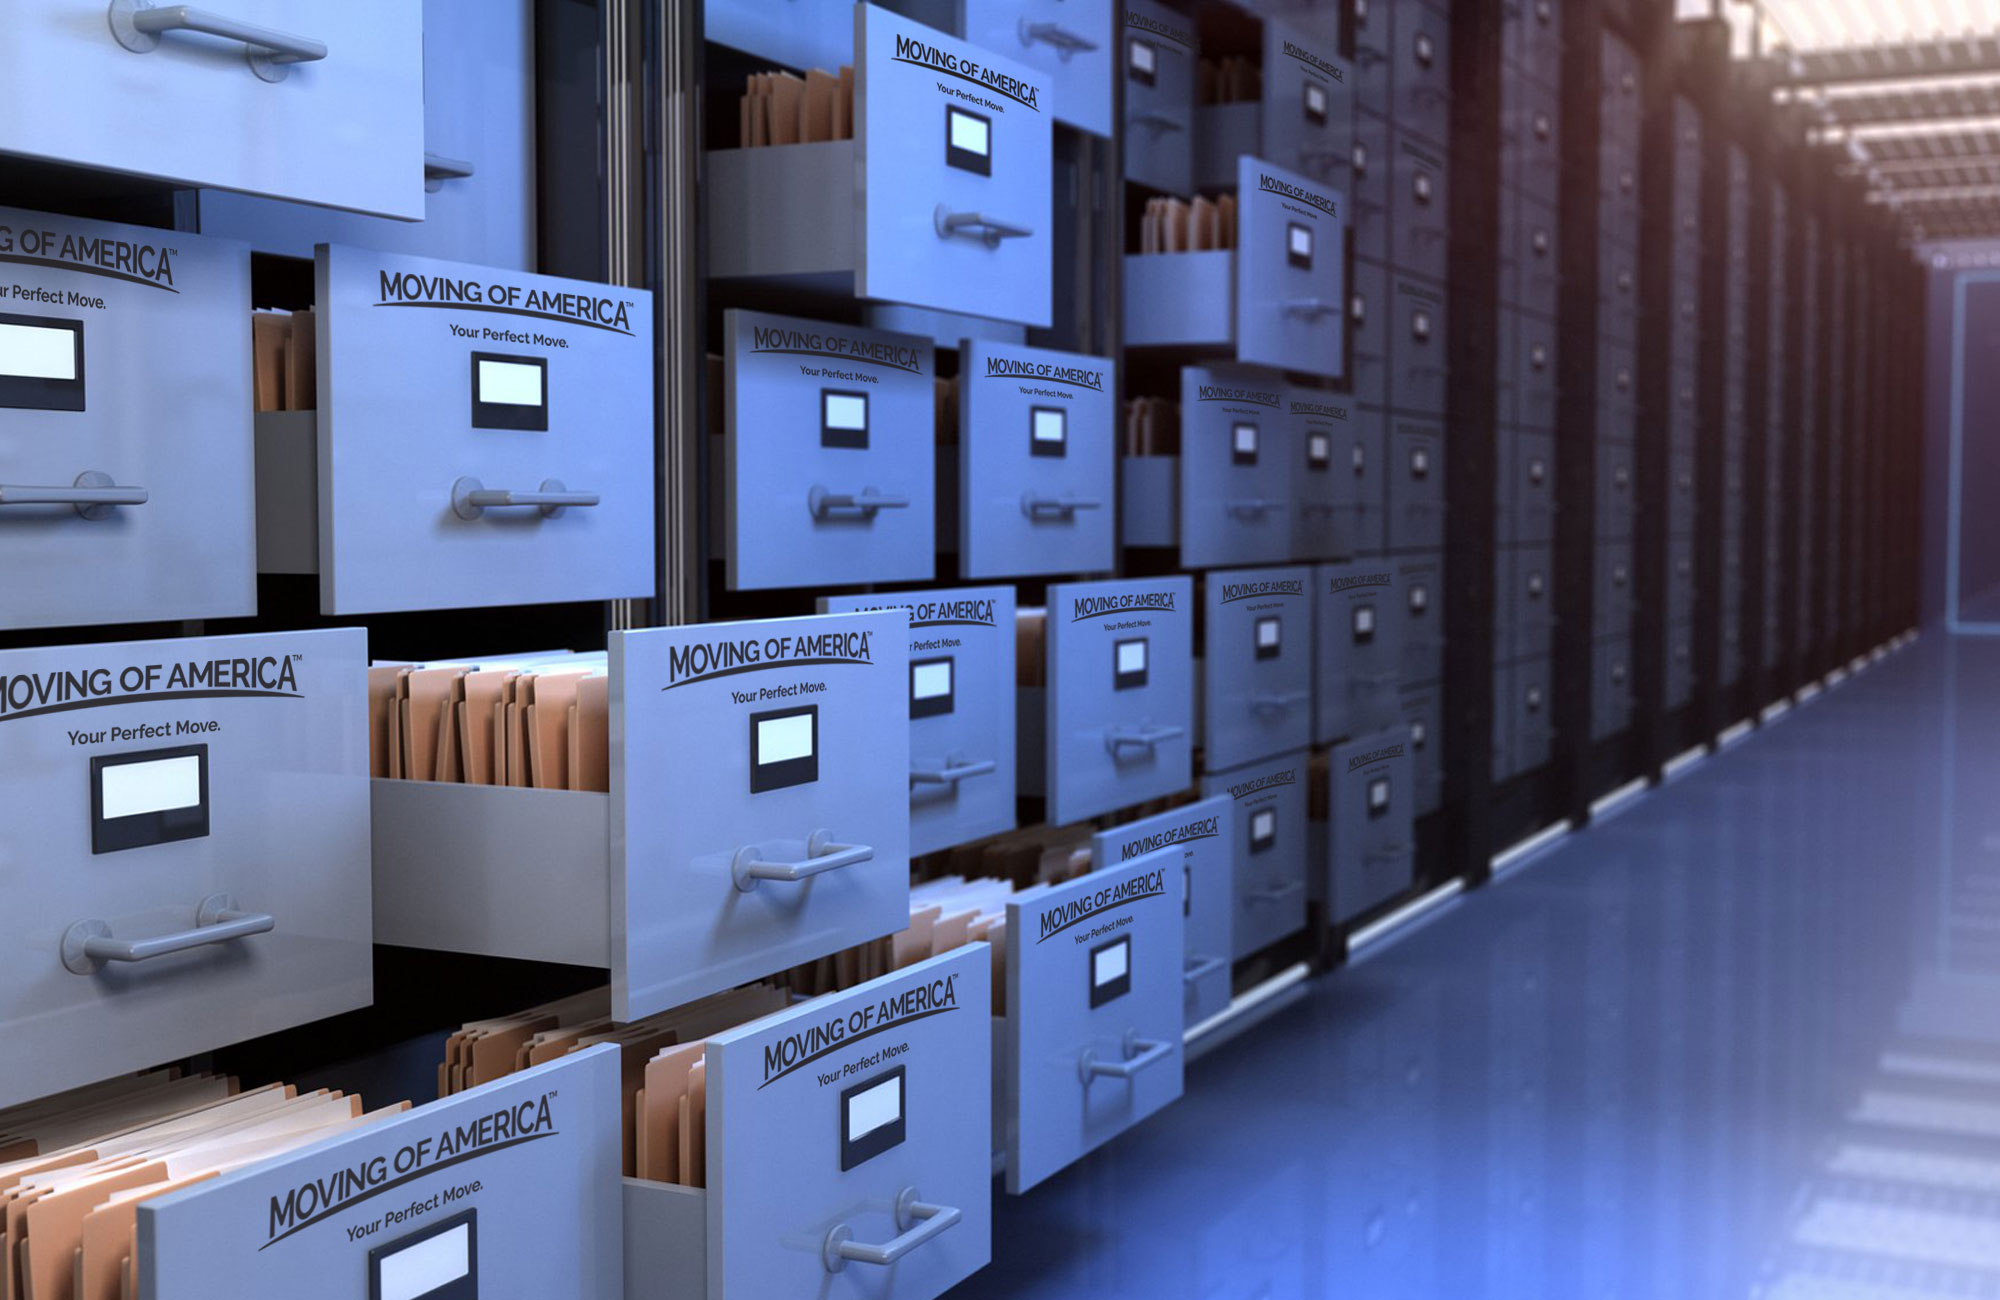 Document Storage